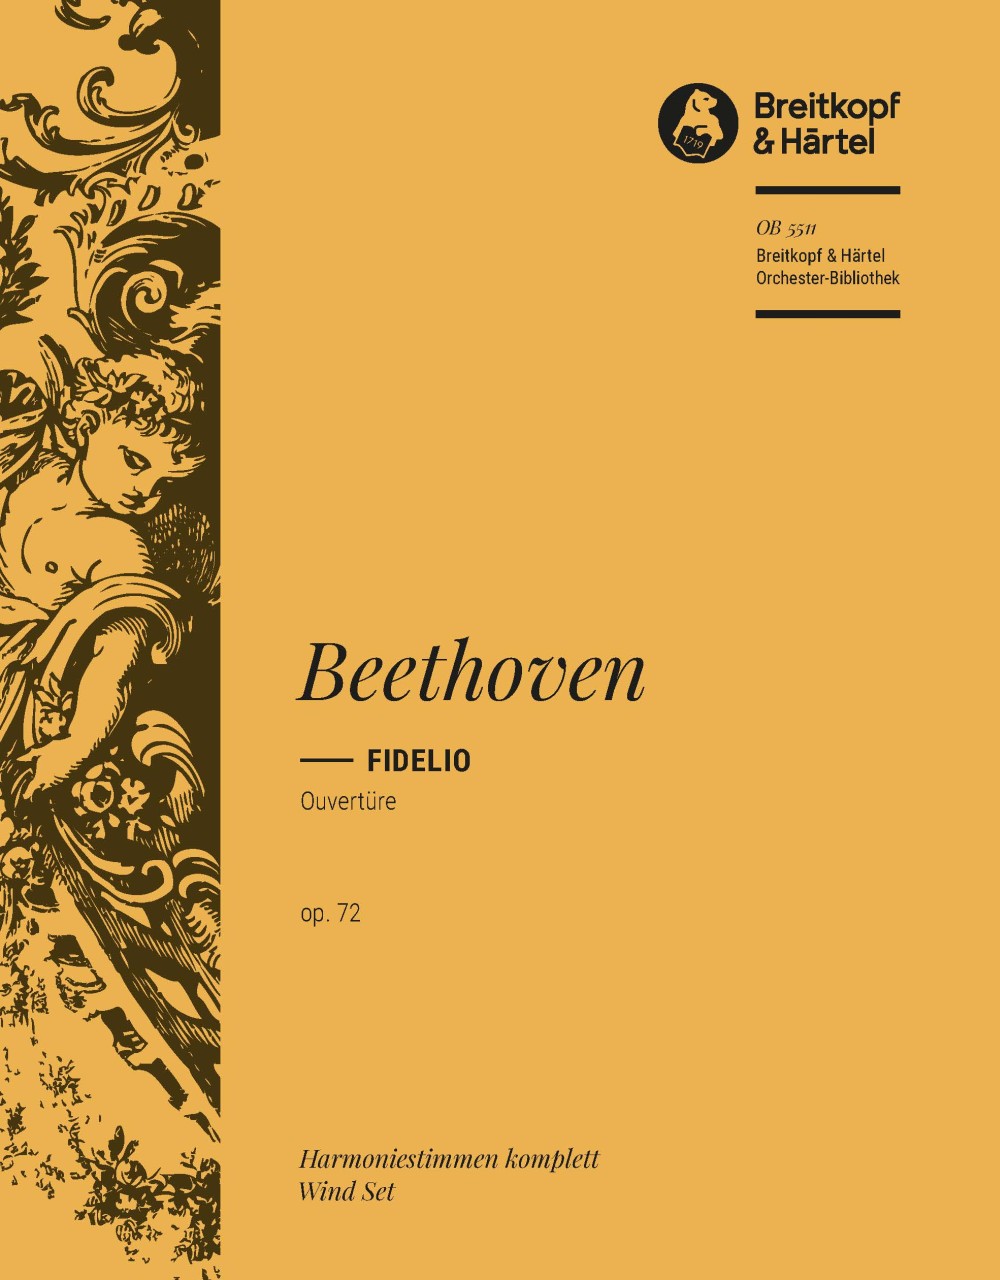 Fidelio Op. 72. Ouvertüre